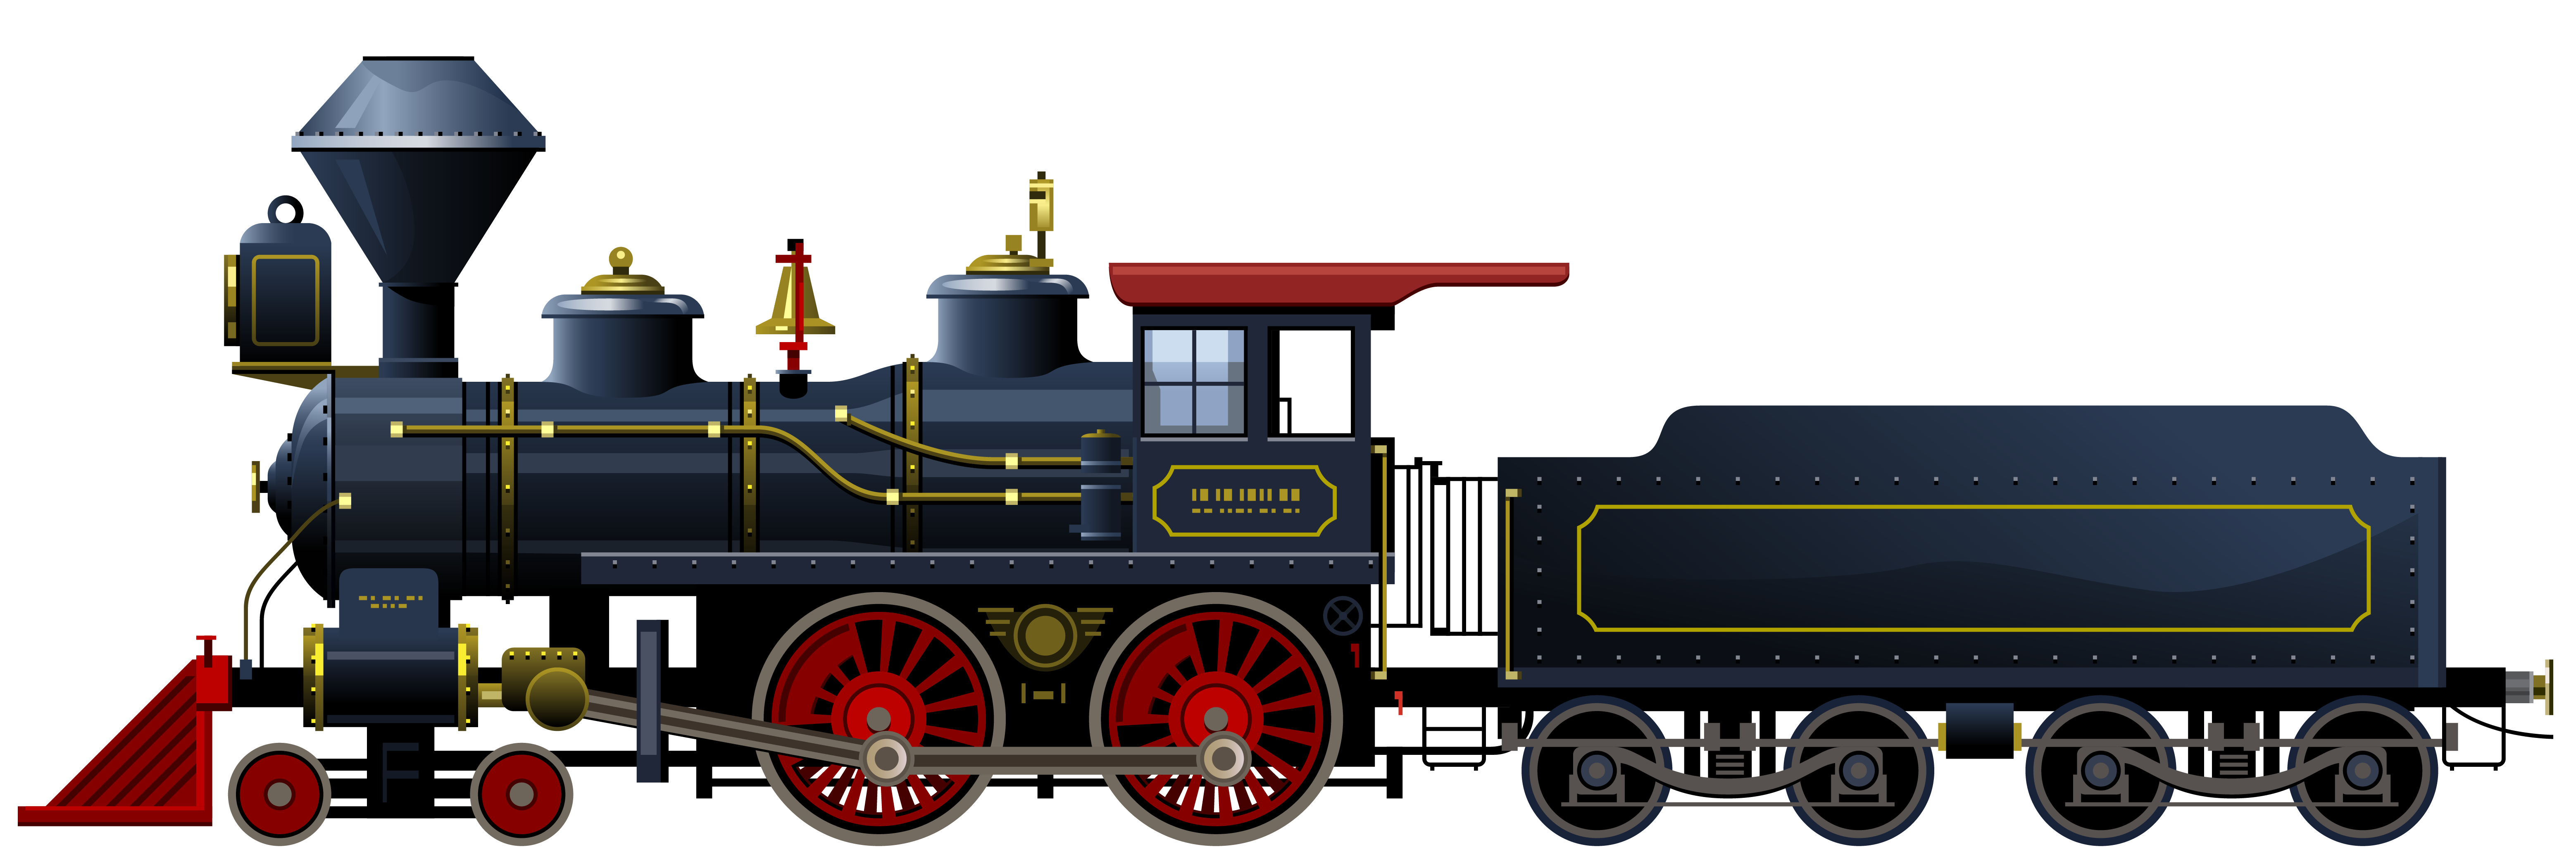 Locomotive #7